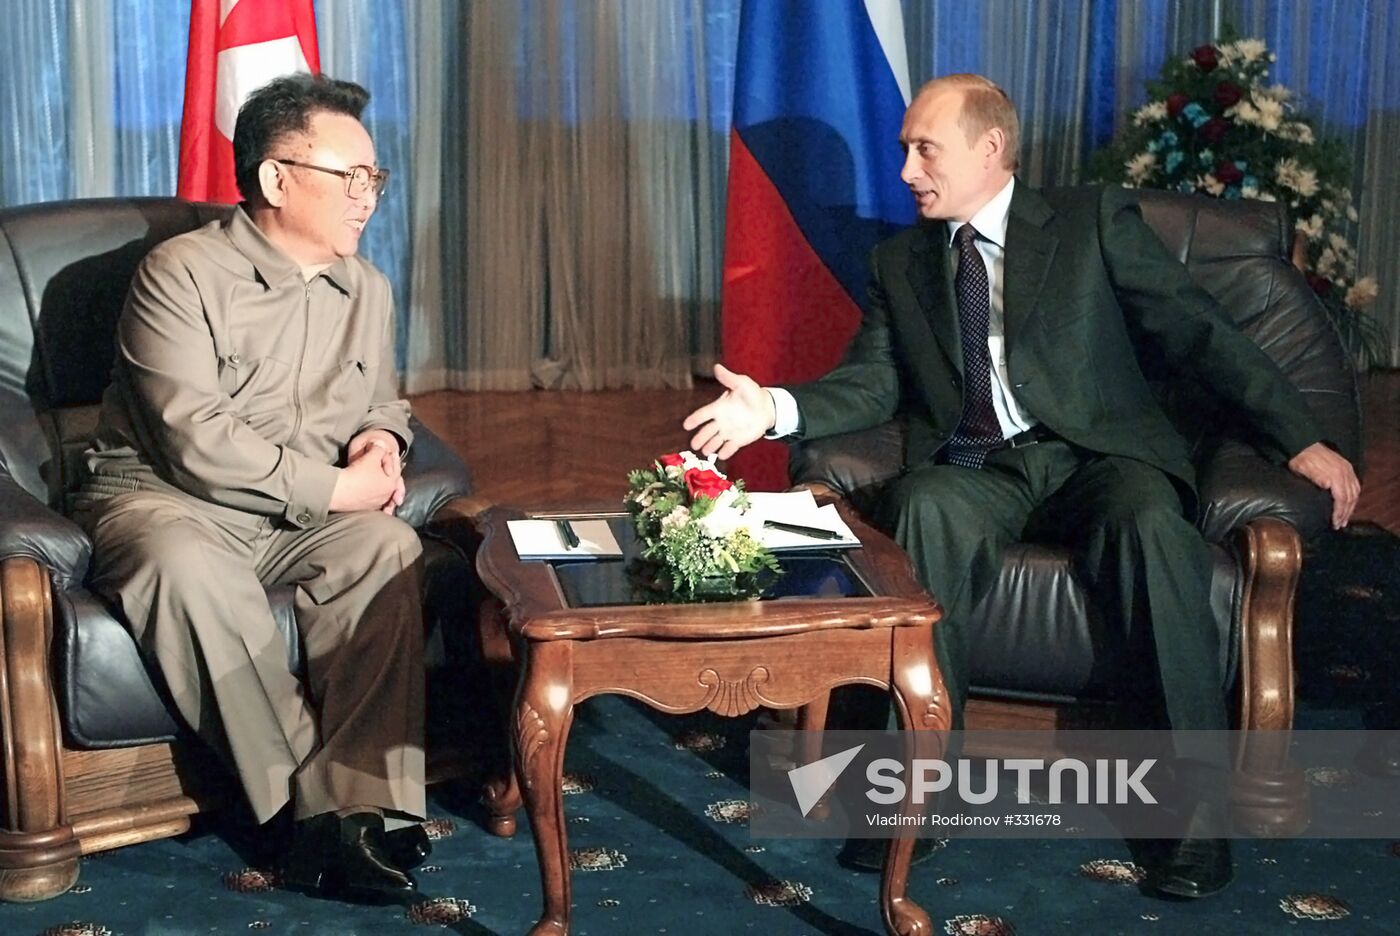 Vladimir Putin and Kim Jong Il